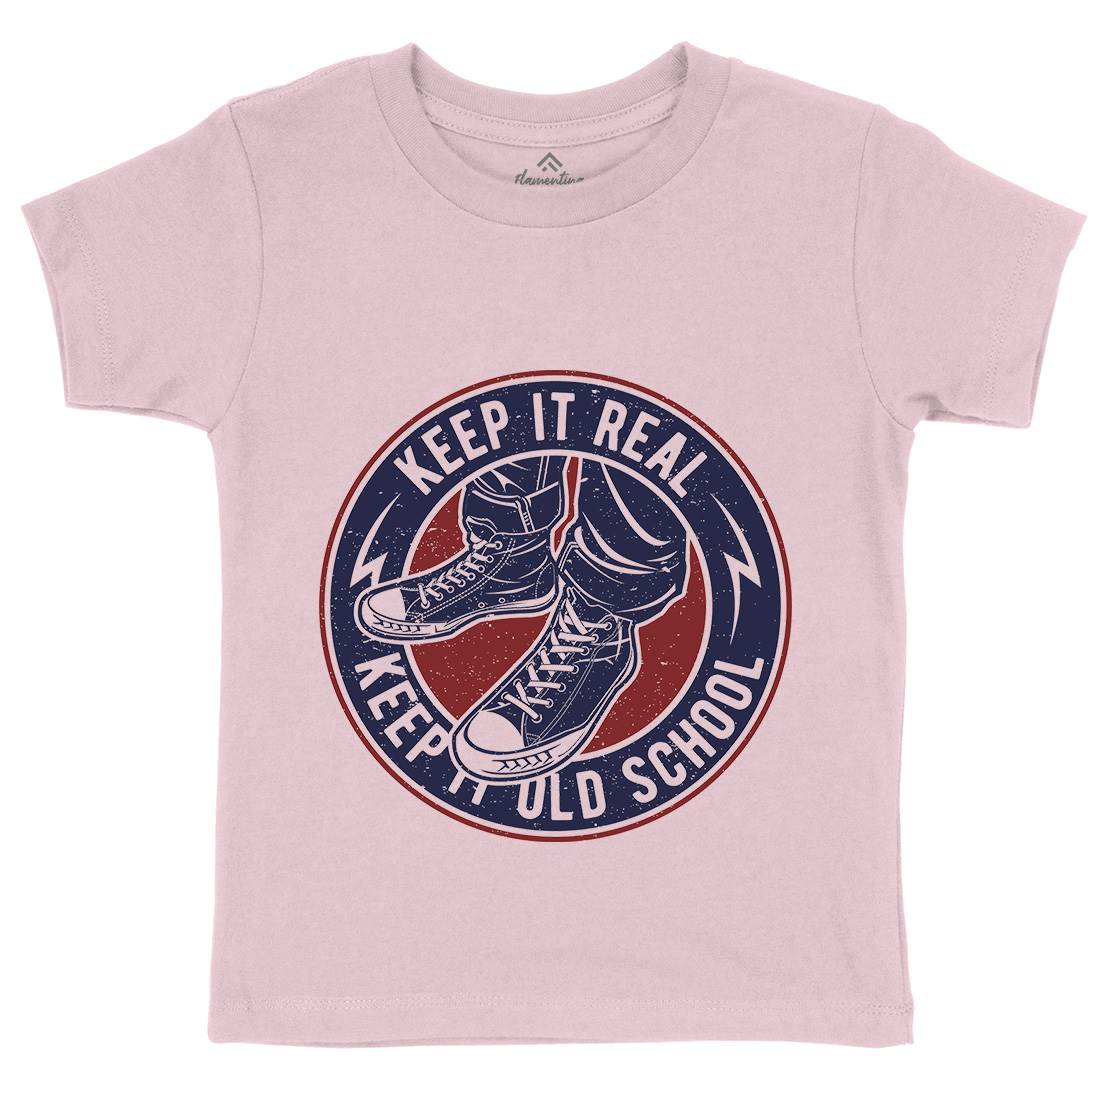 Keep It Old School Kids Organic Crew Neck T-Shirt Retro A074